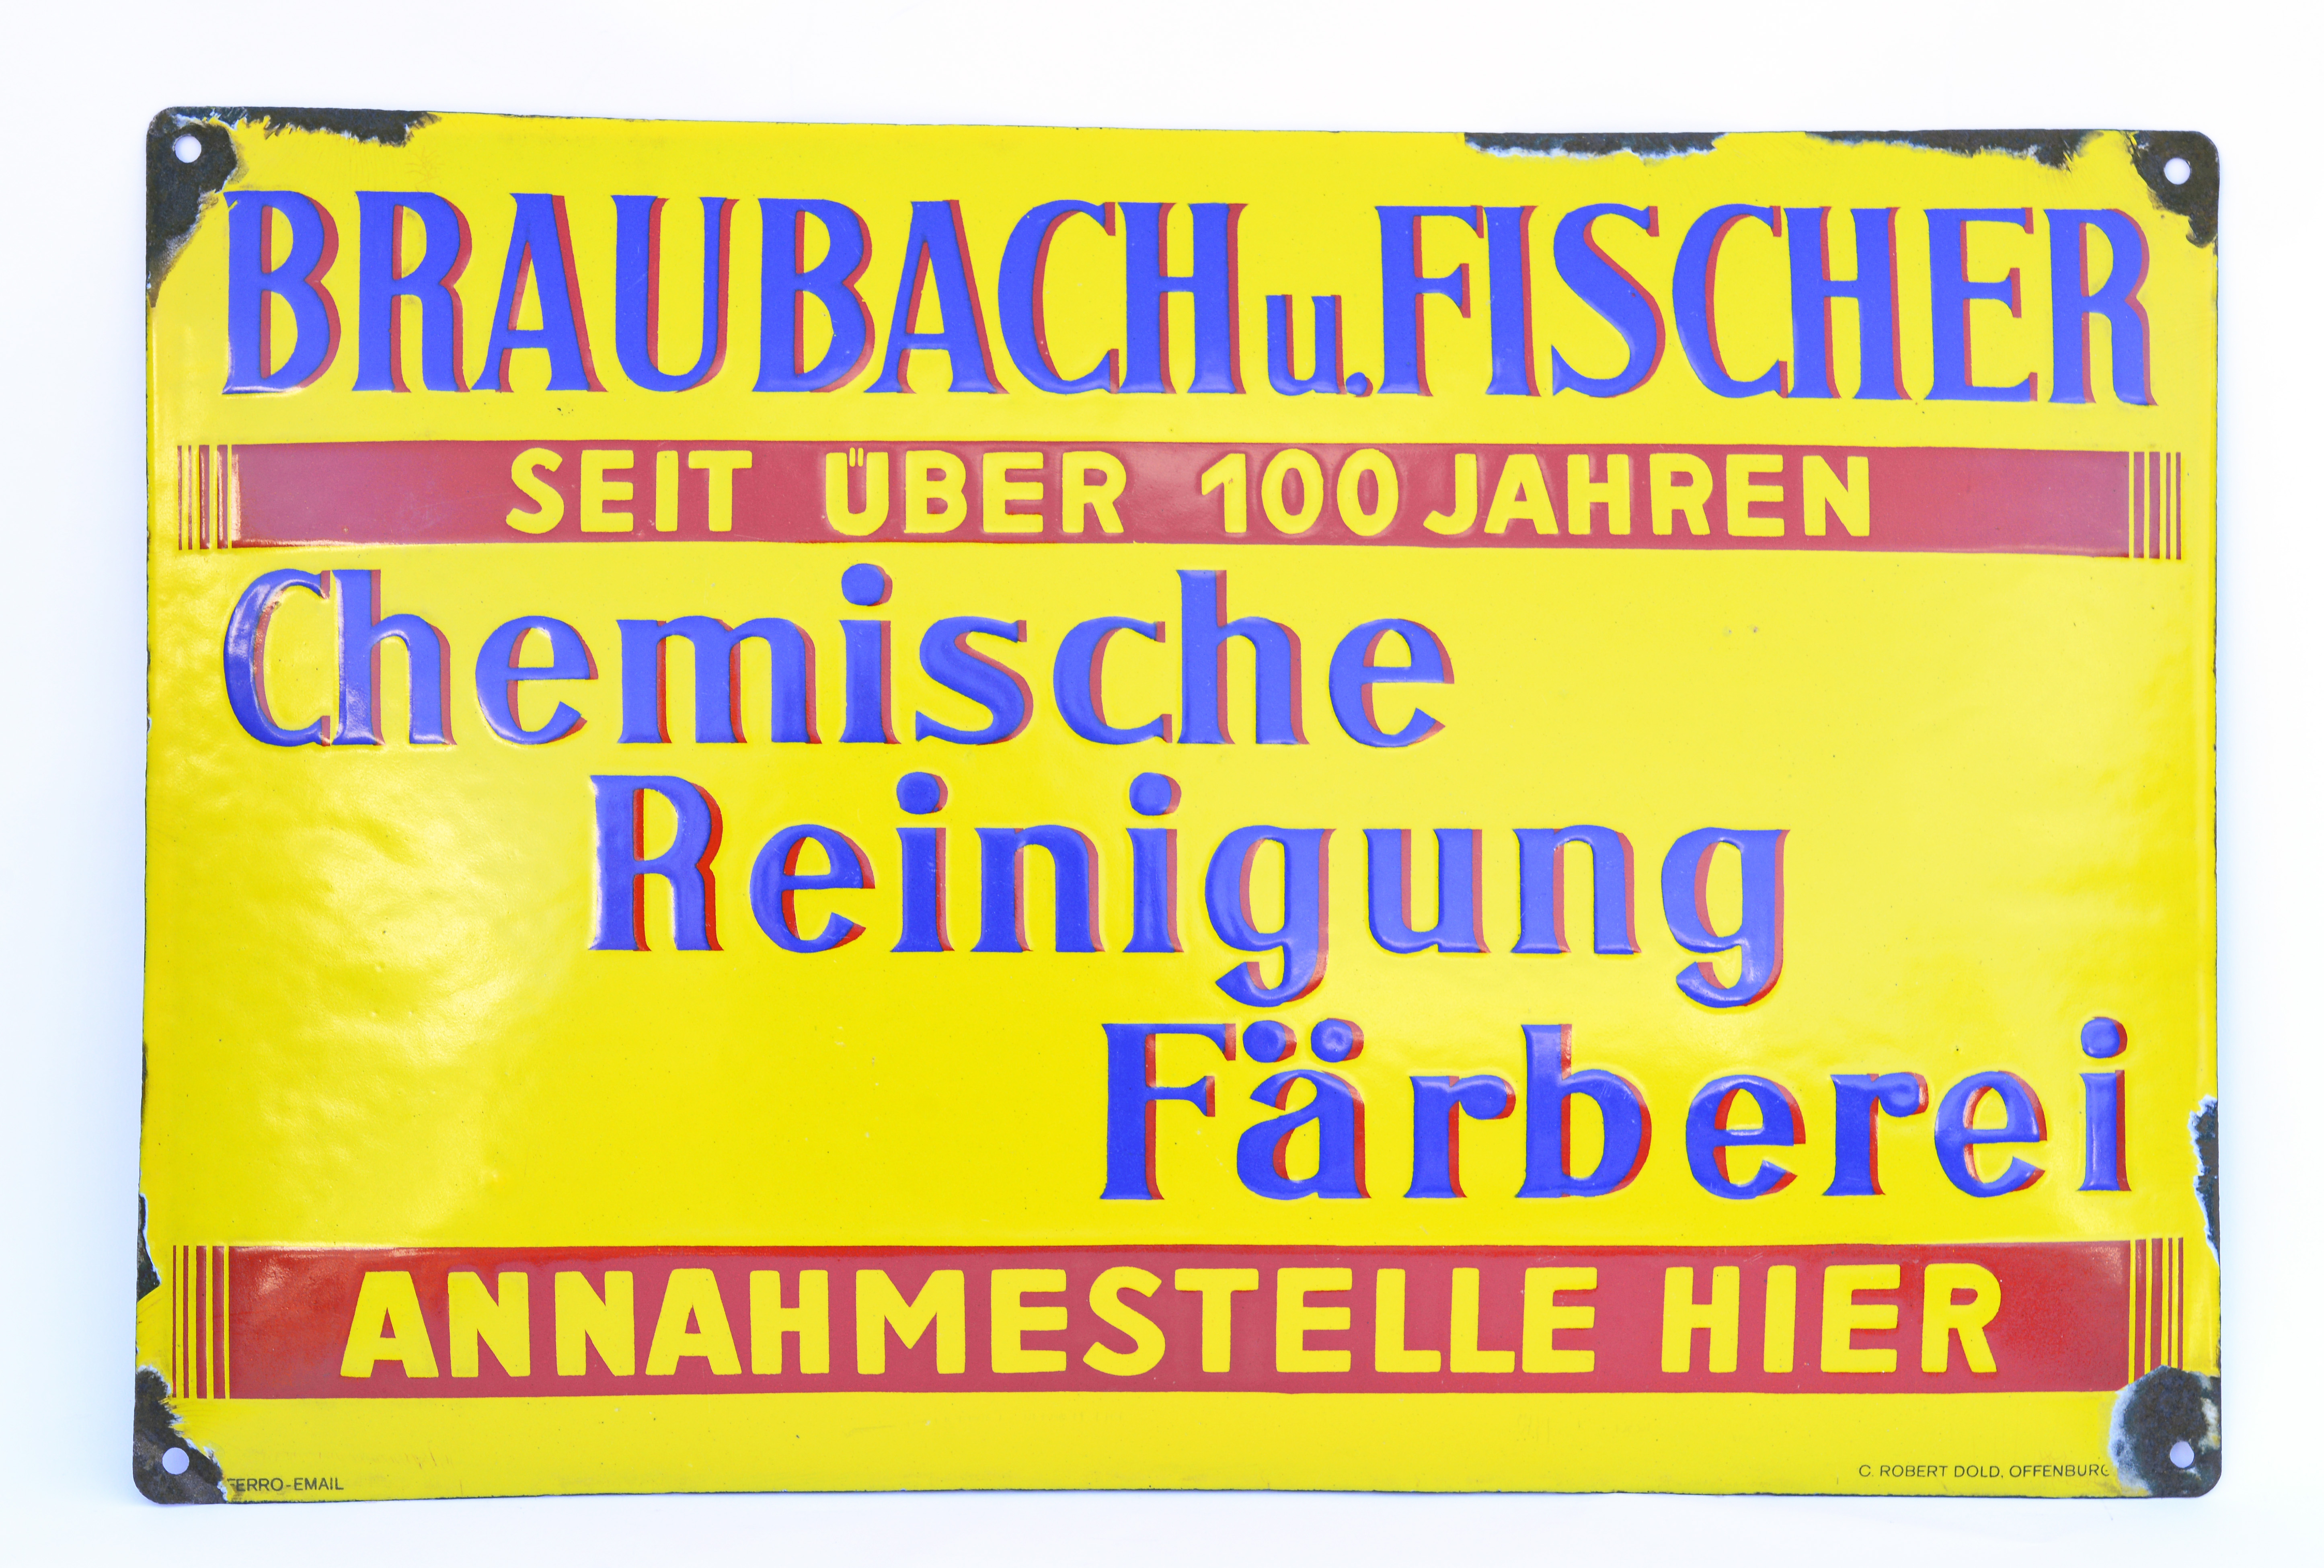 Braubach und Fischer, enamel sign (bulky), from the 1930s, 59 x 39 cm, C 2+